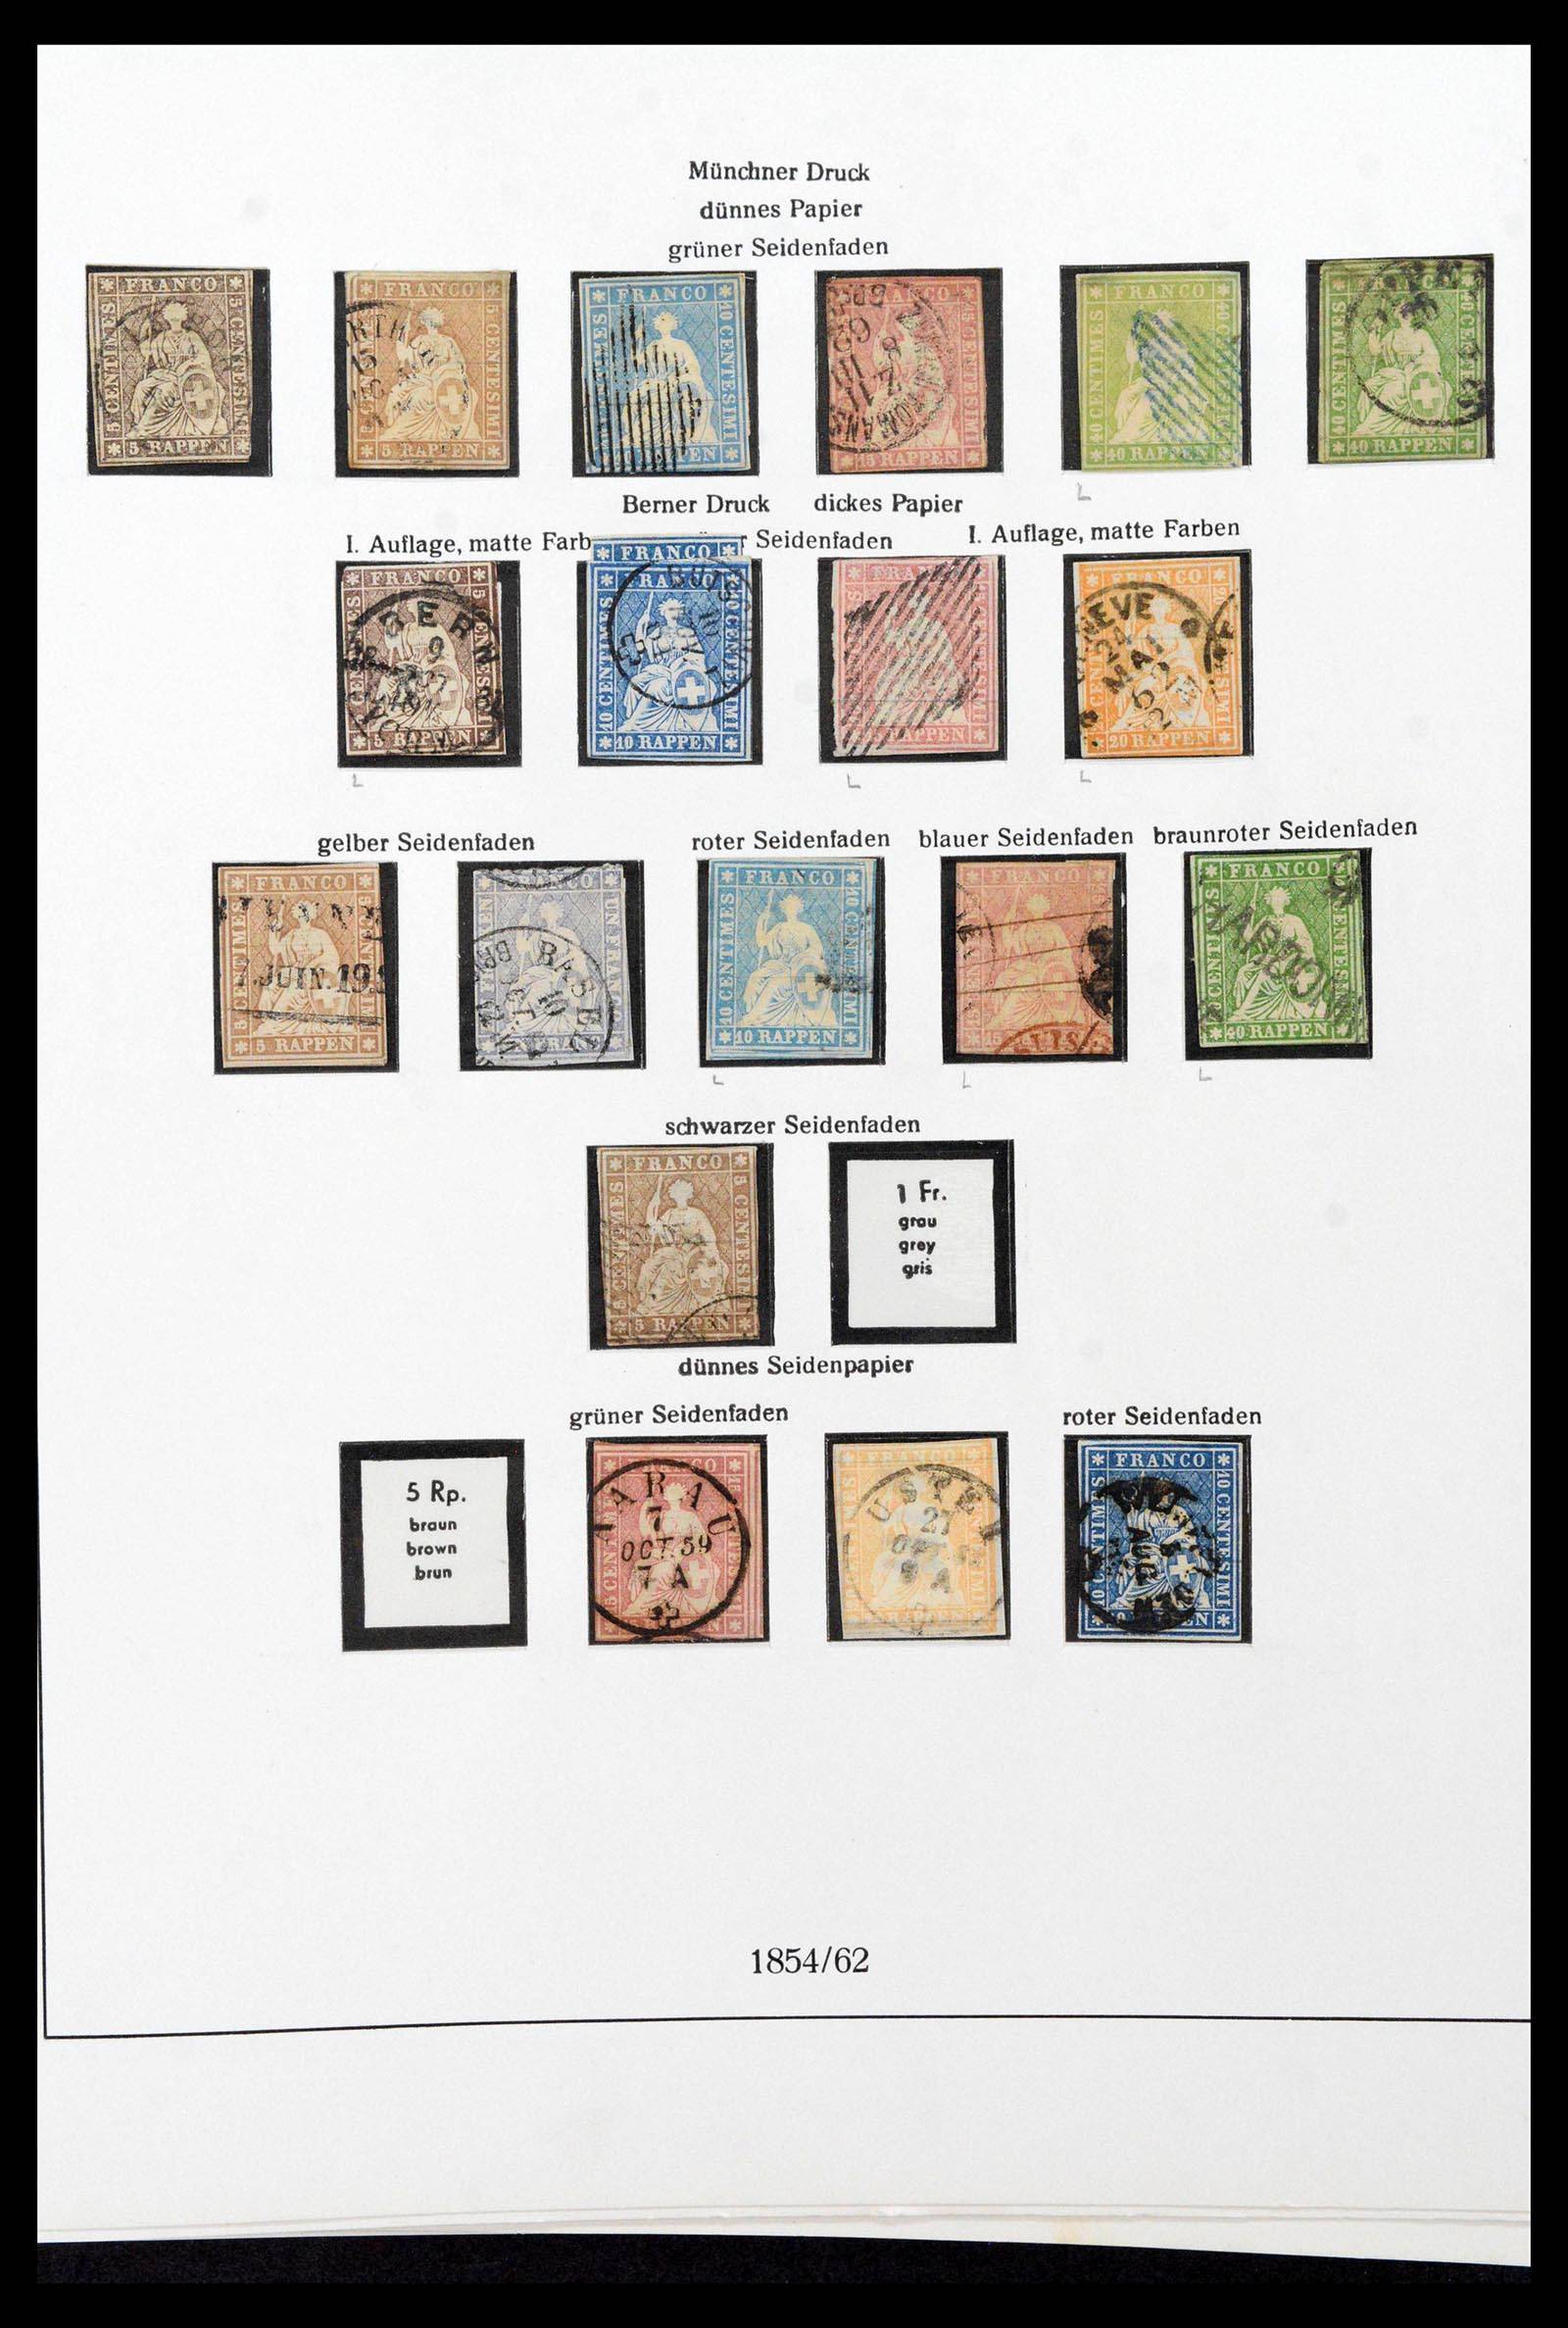 39235 0005 - Stamp collection 39235 Switzerland 1843-1960.